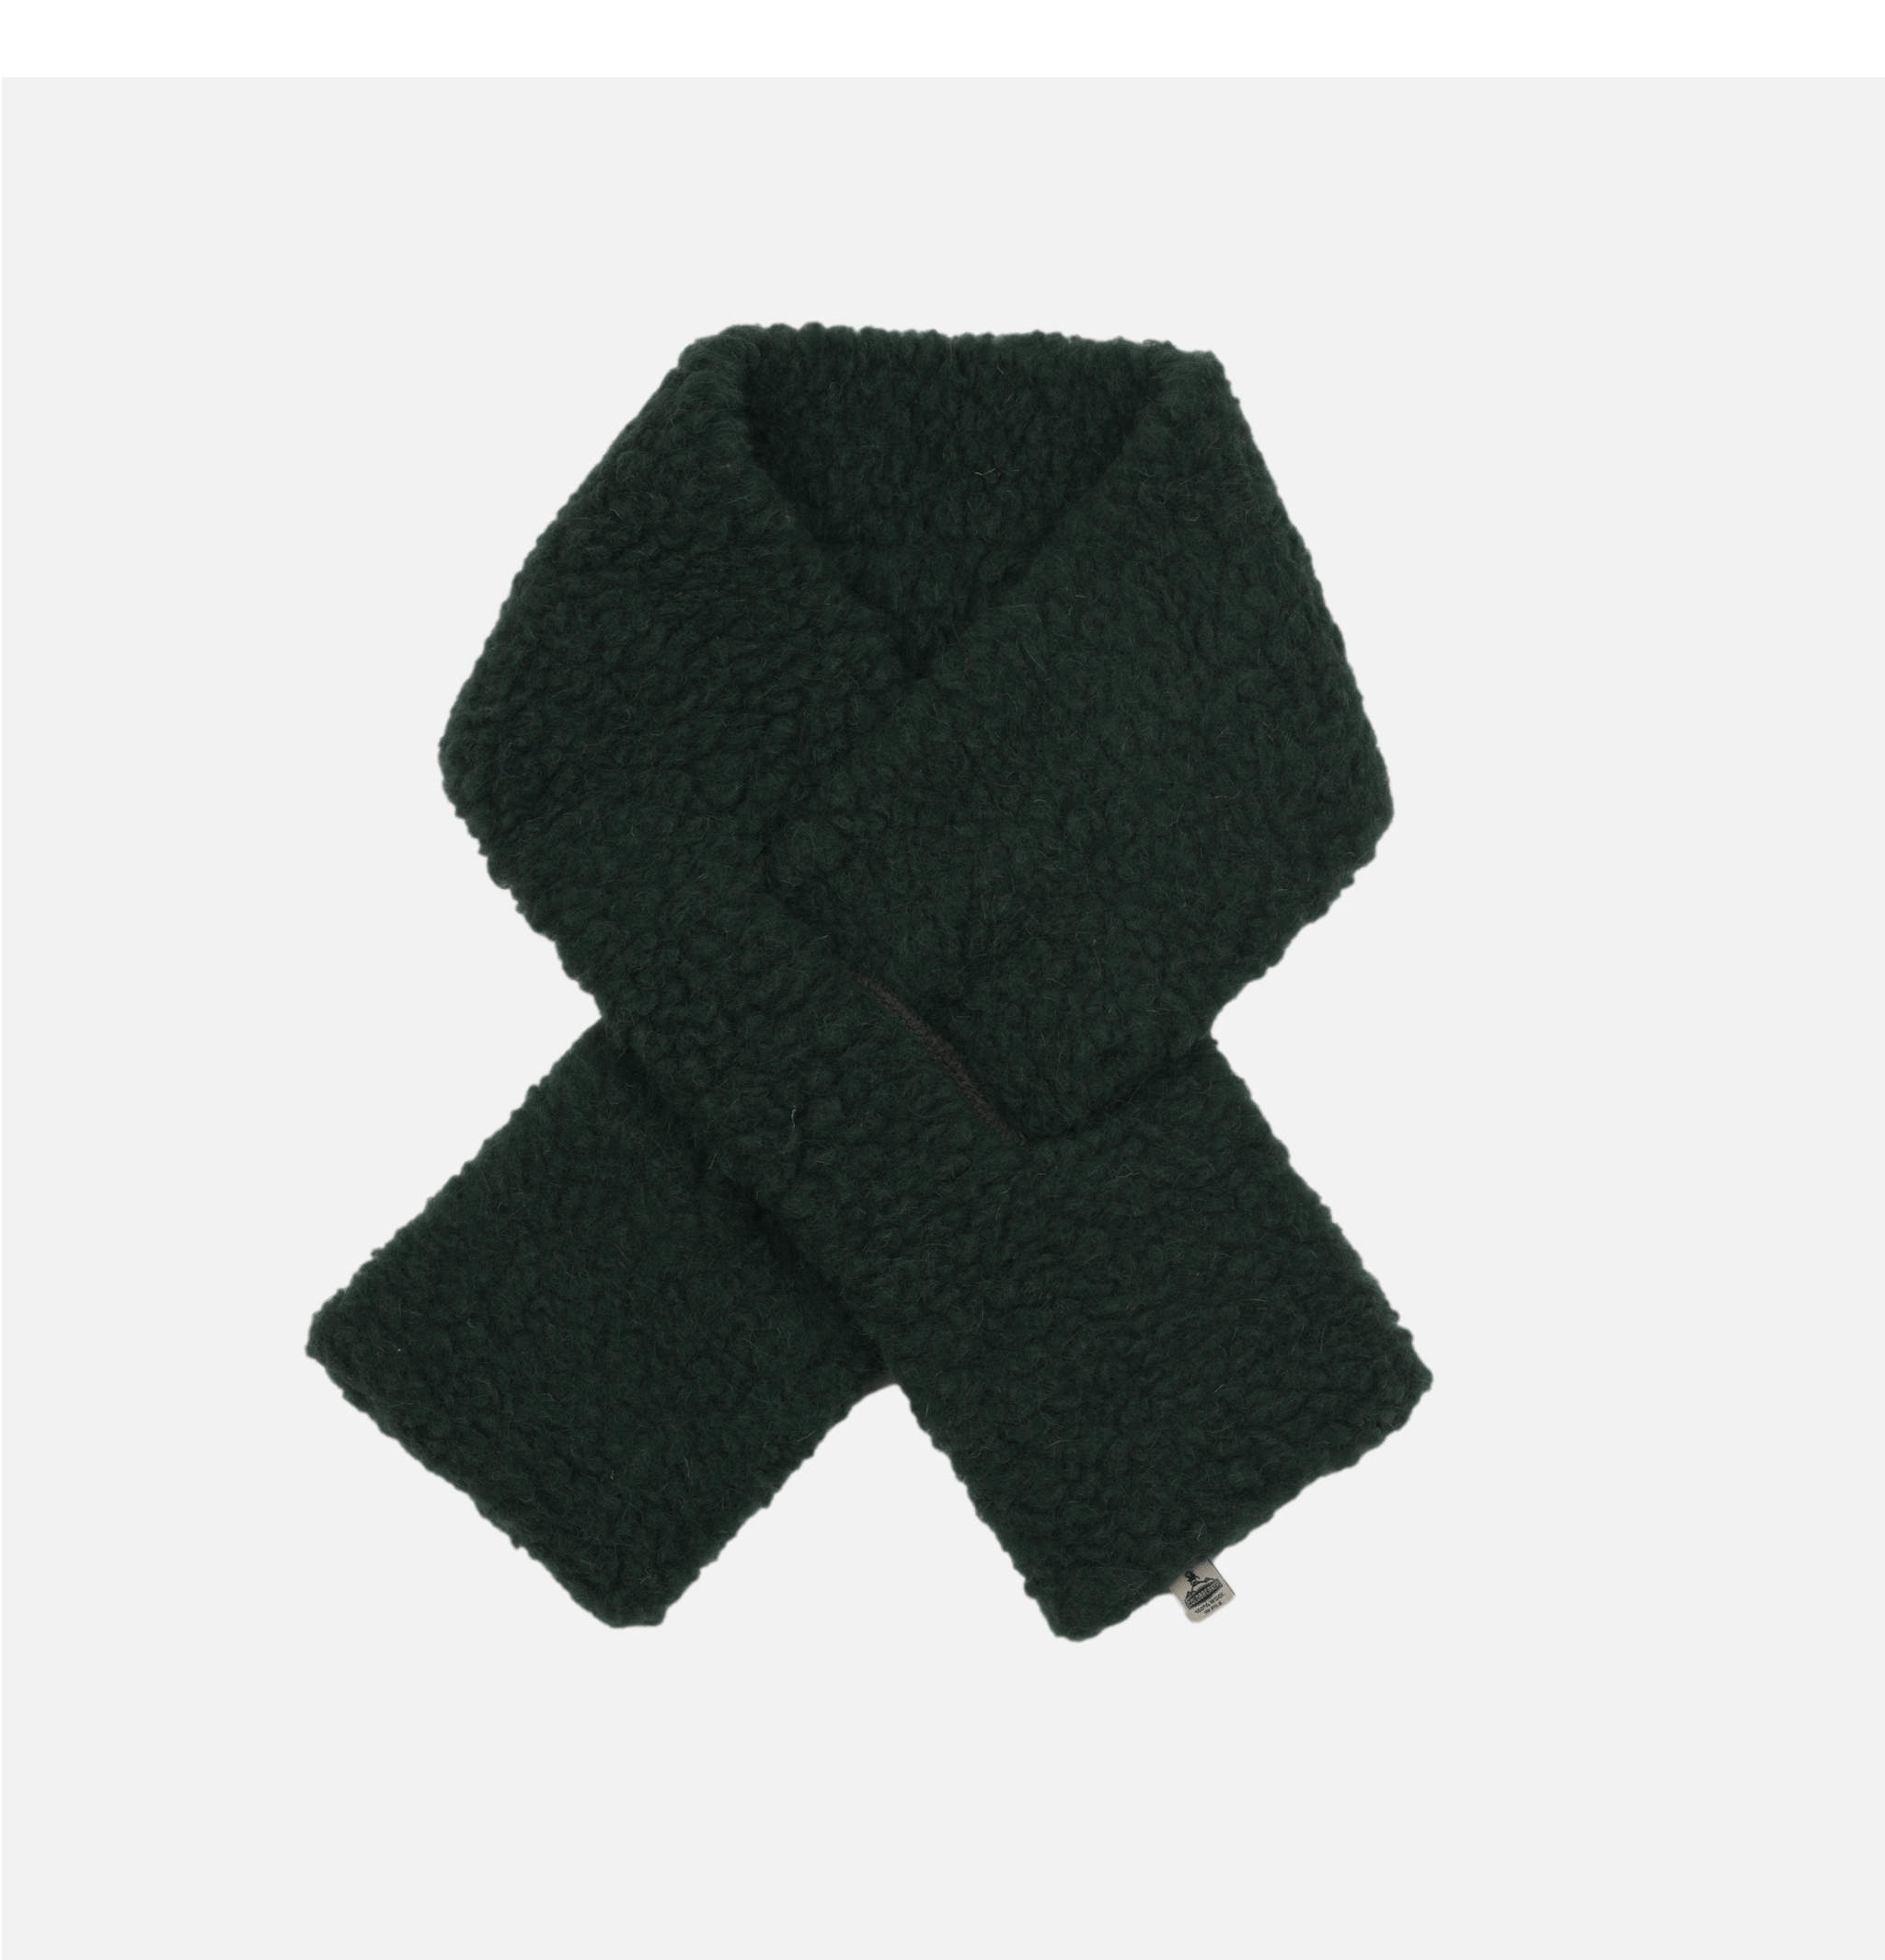 Coldbreaker tubular scarf in Dark Green.